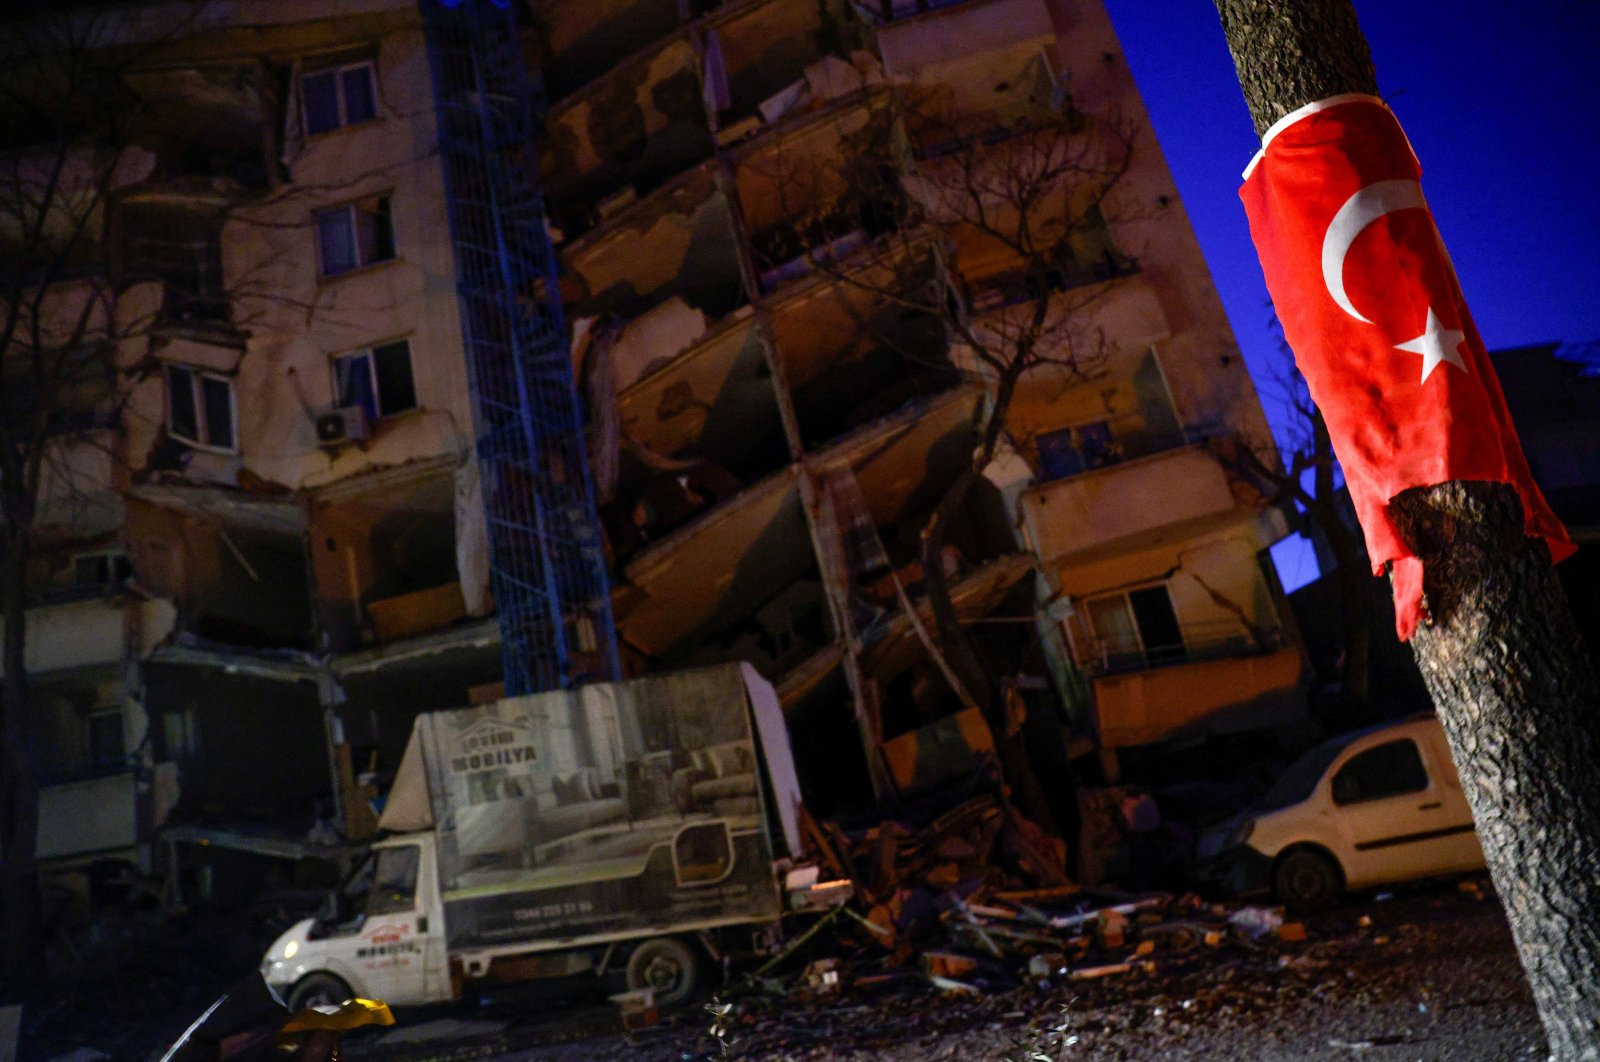 Türkiye, gempa Suriah: Tantangan bagi kehidupan dan kekuasaan